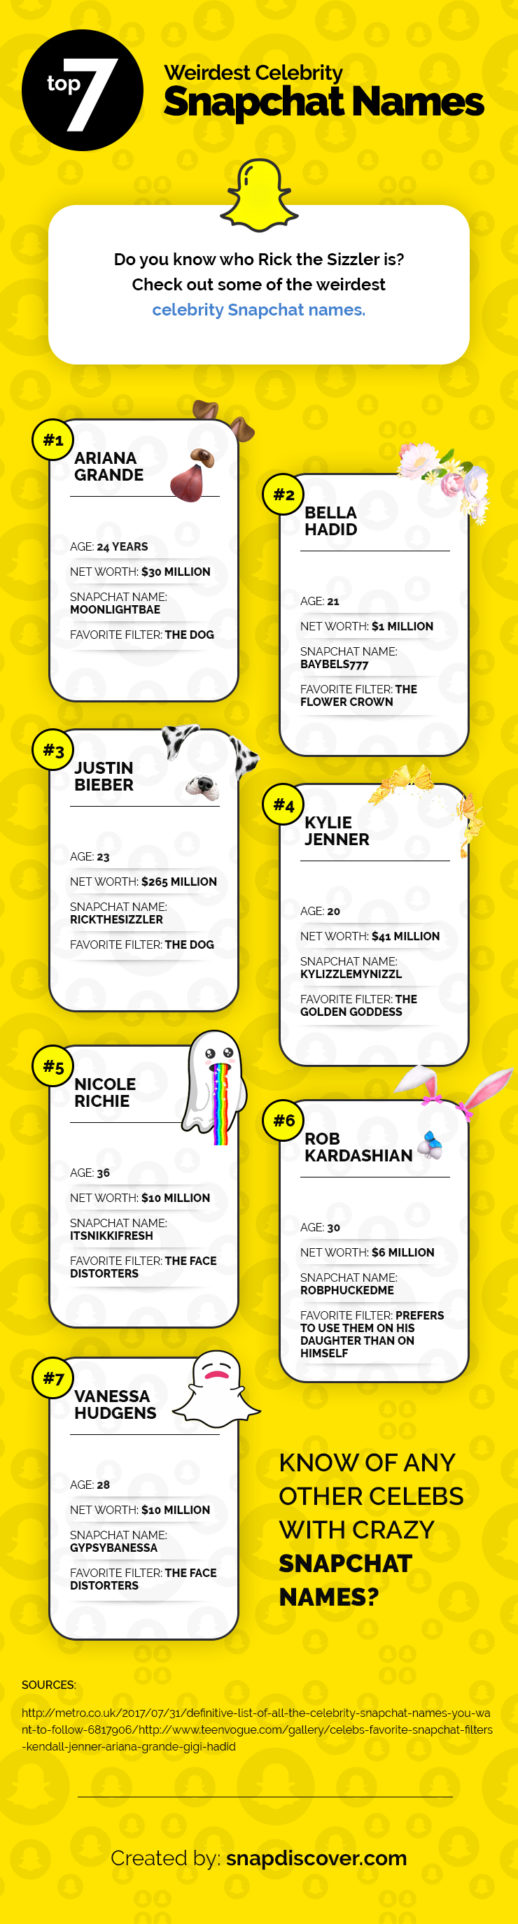 Top 7 Weirdest Celebrity Snapchat Names